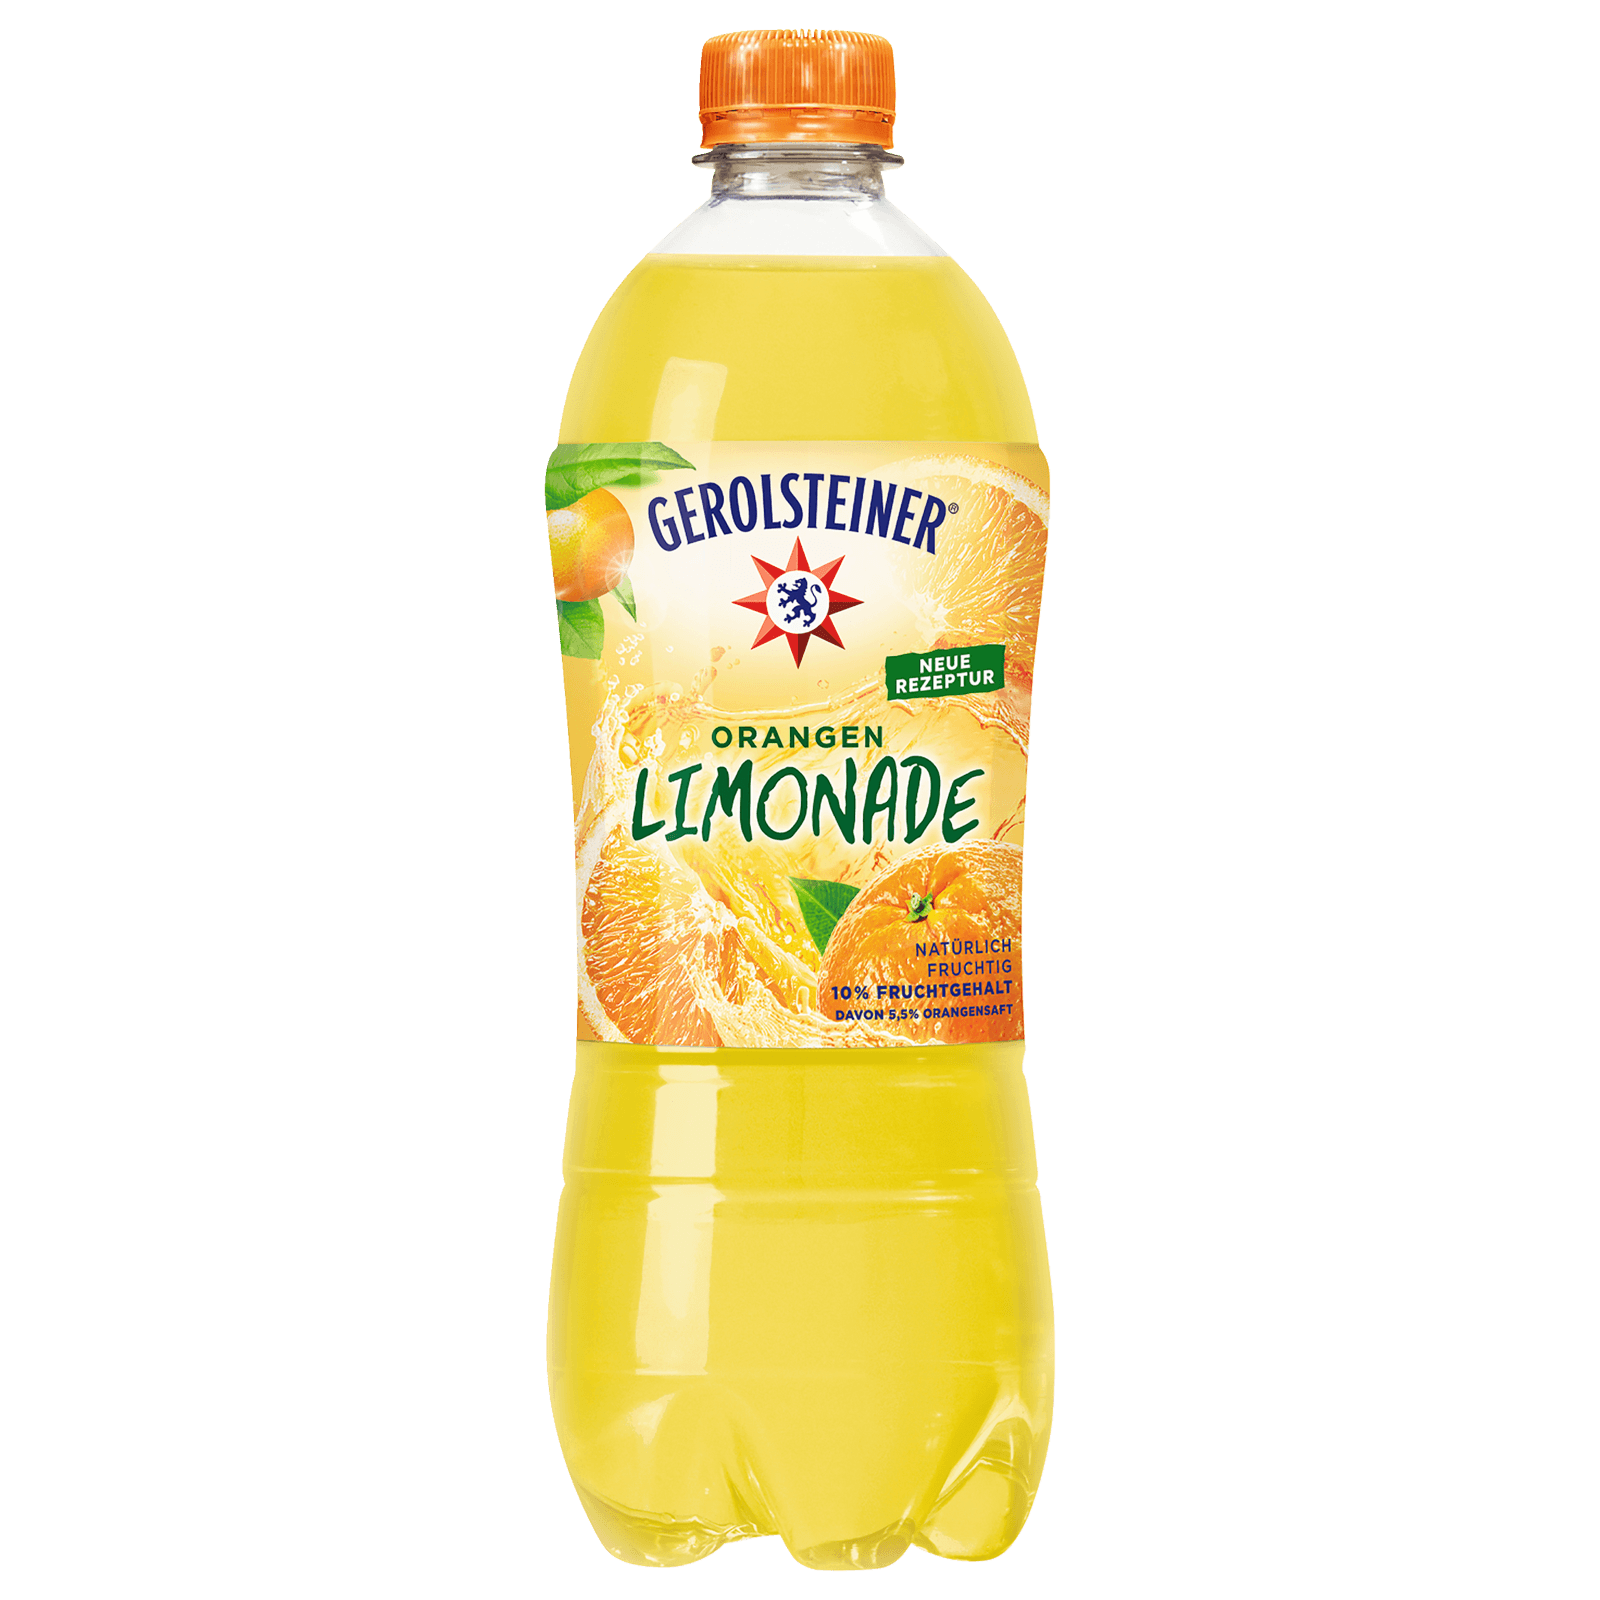 Gerolsteiner Orangenlimonade 0,75l bei REWE online bestellen!